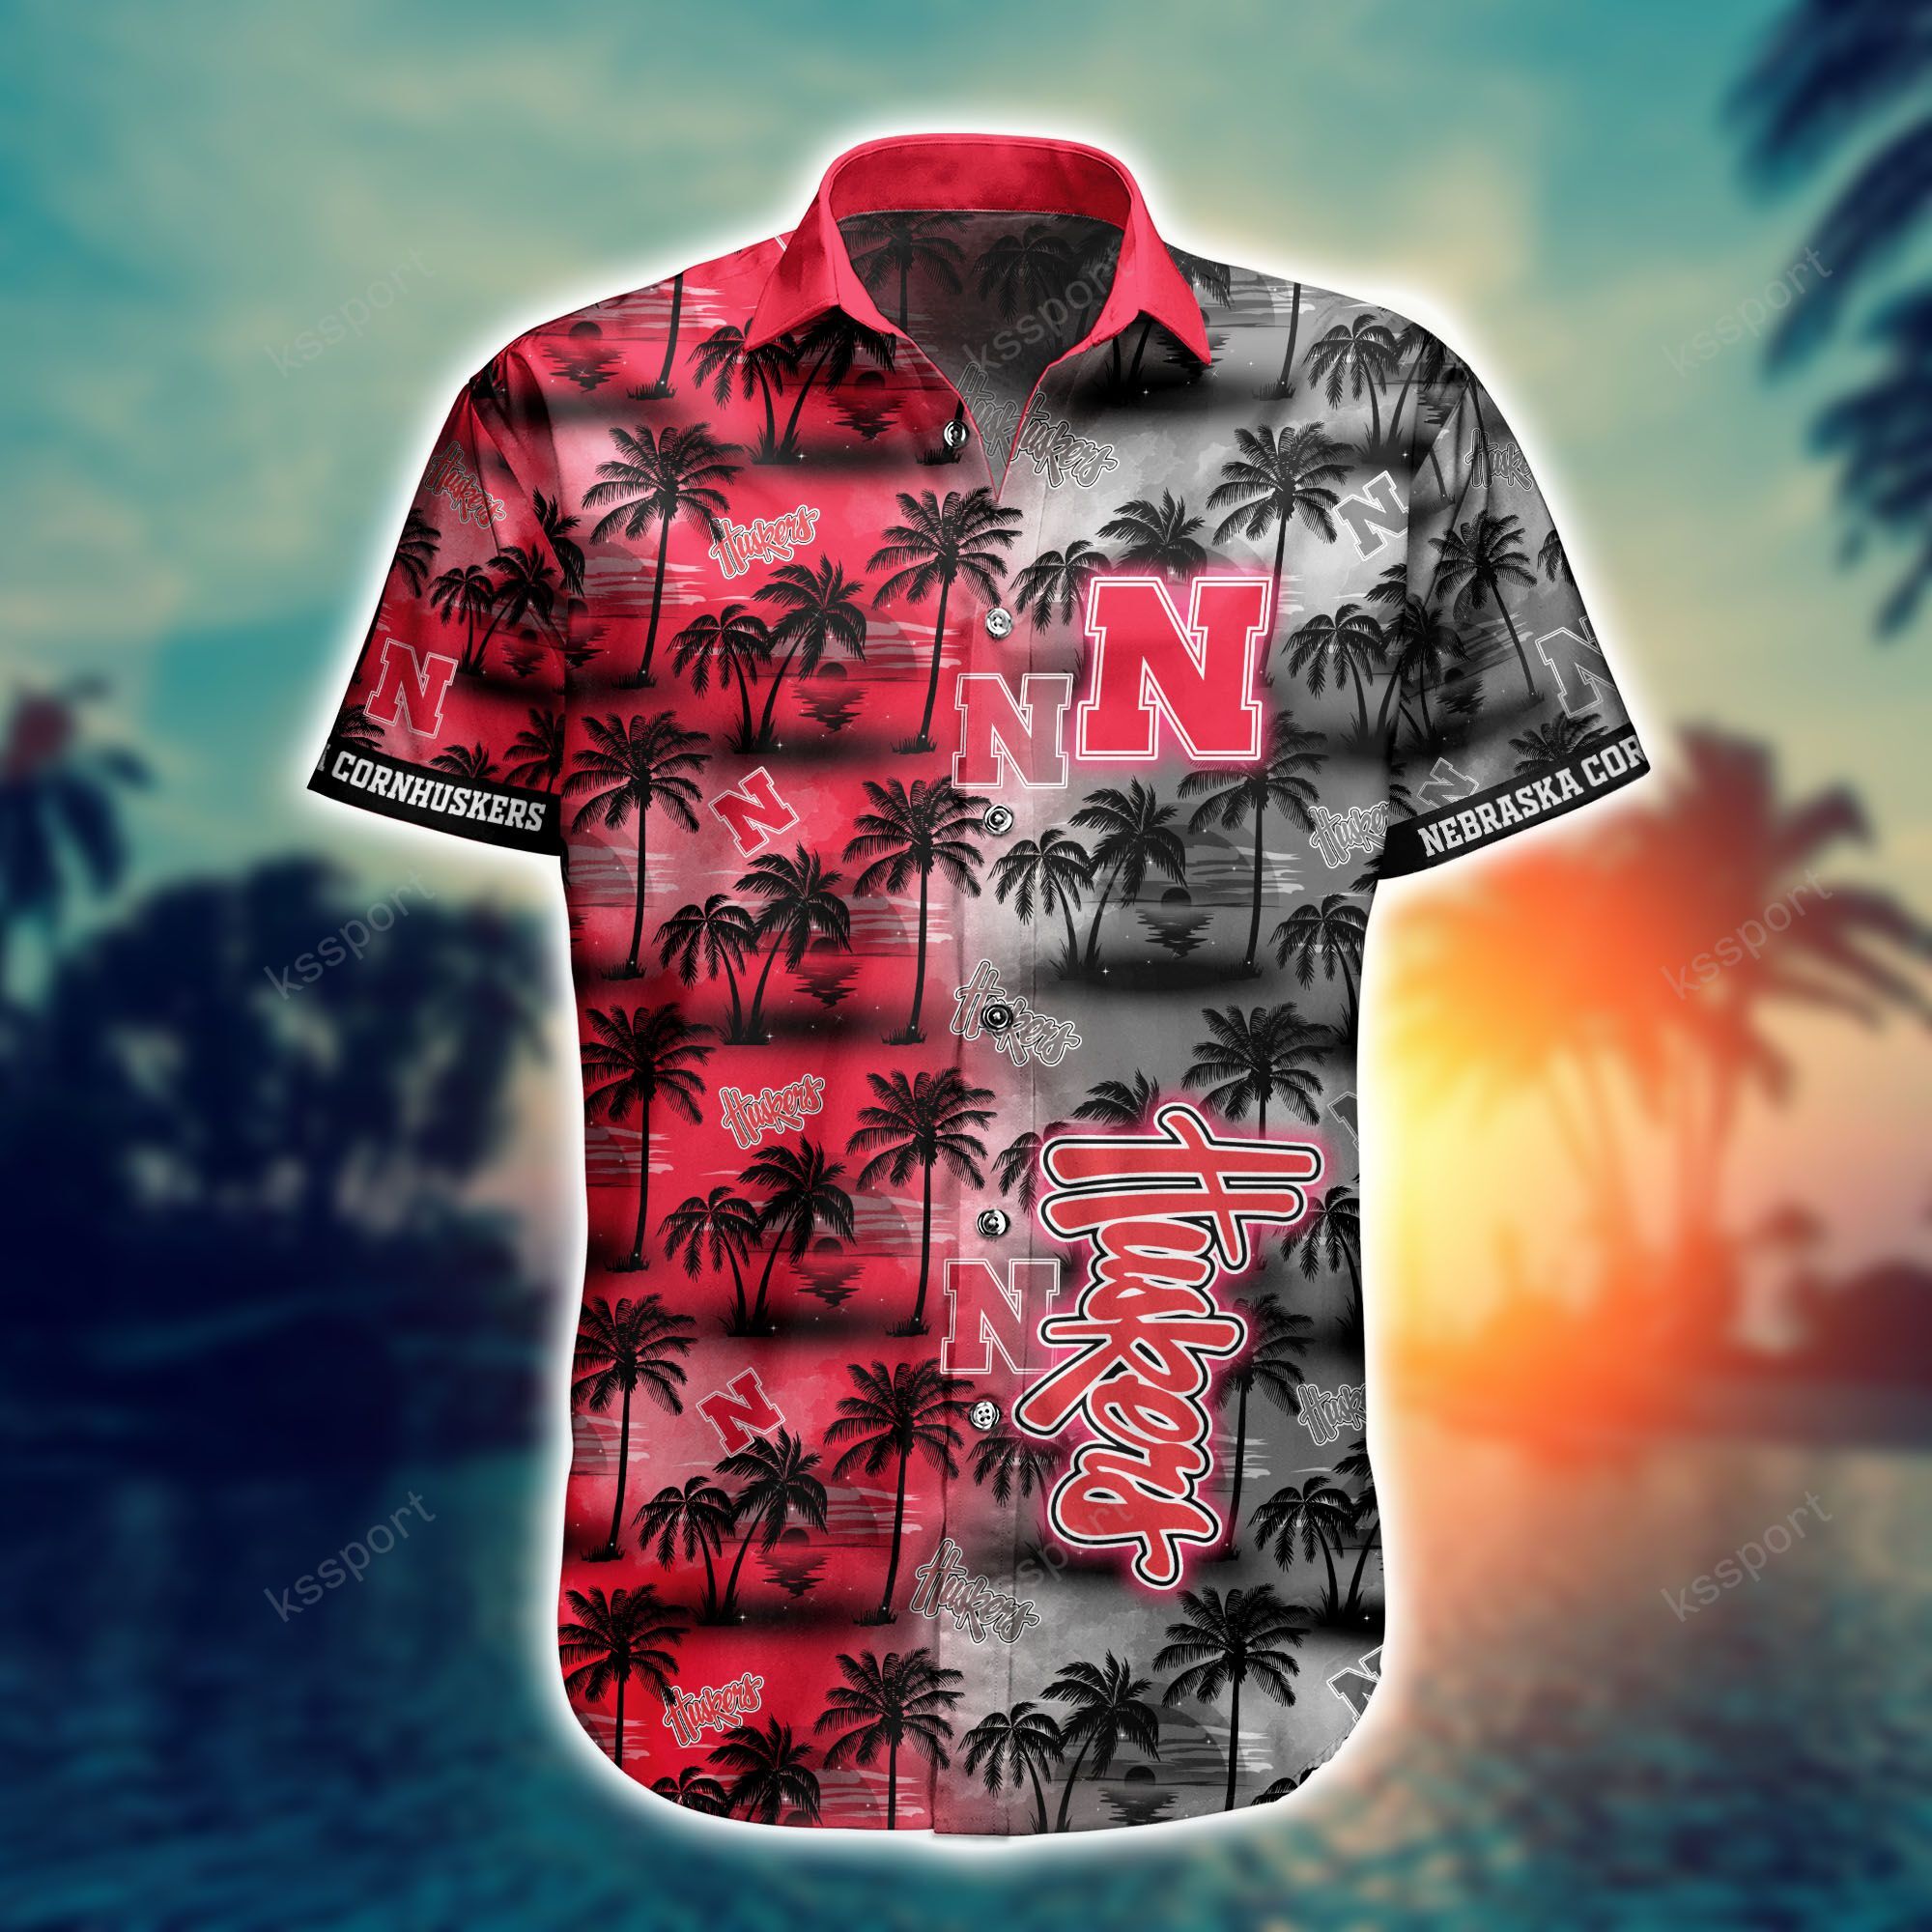 Hawaiian shirt and shorts is a great way to look stylish at a beach party 84